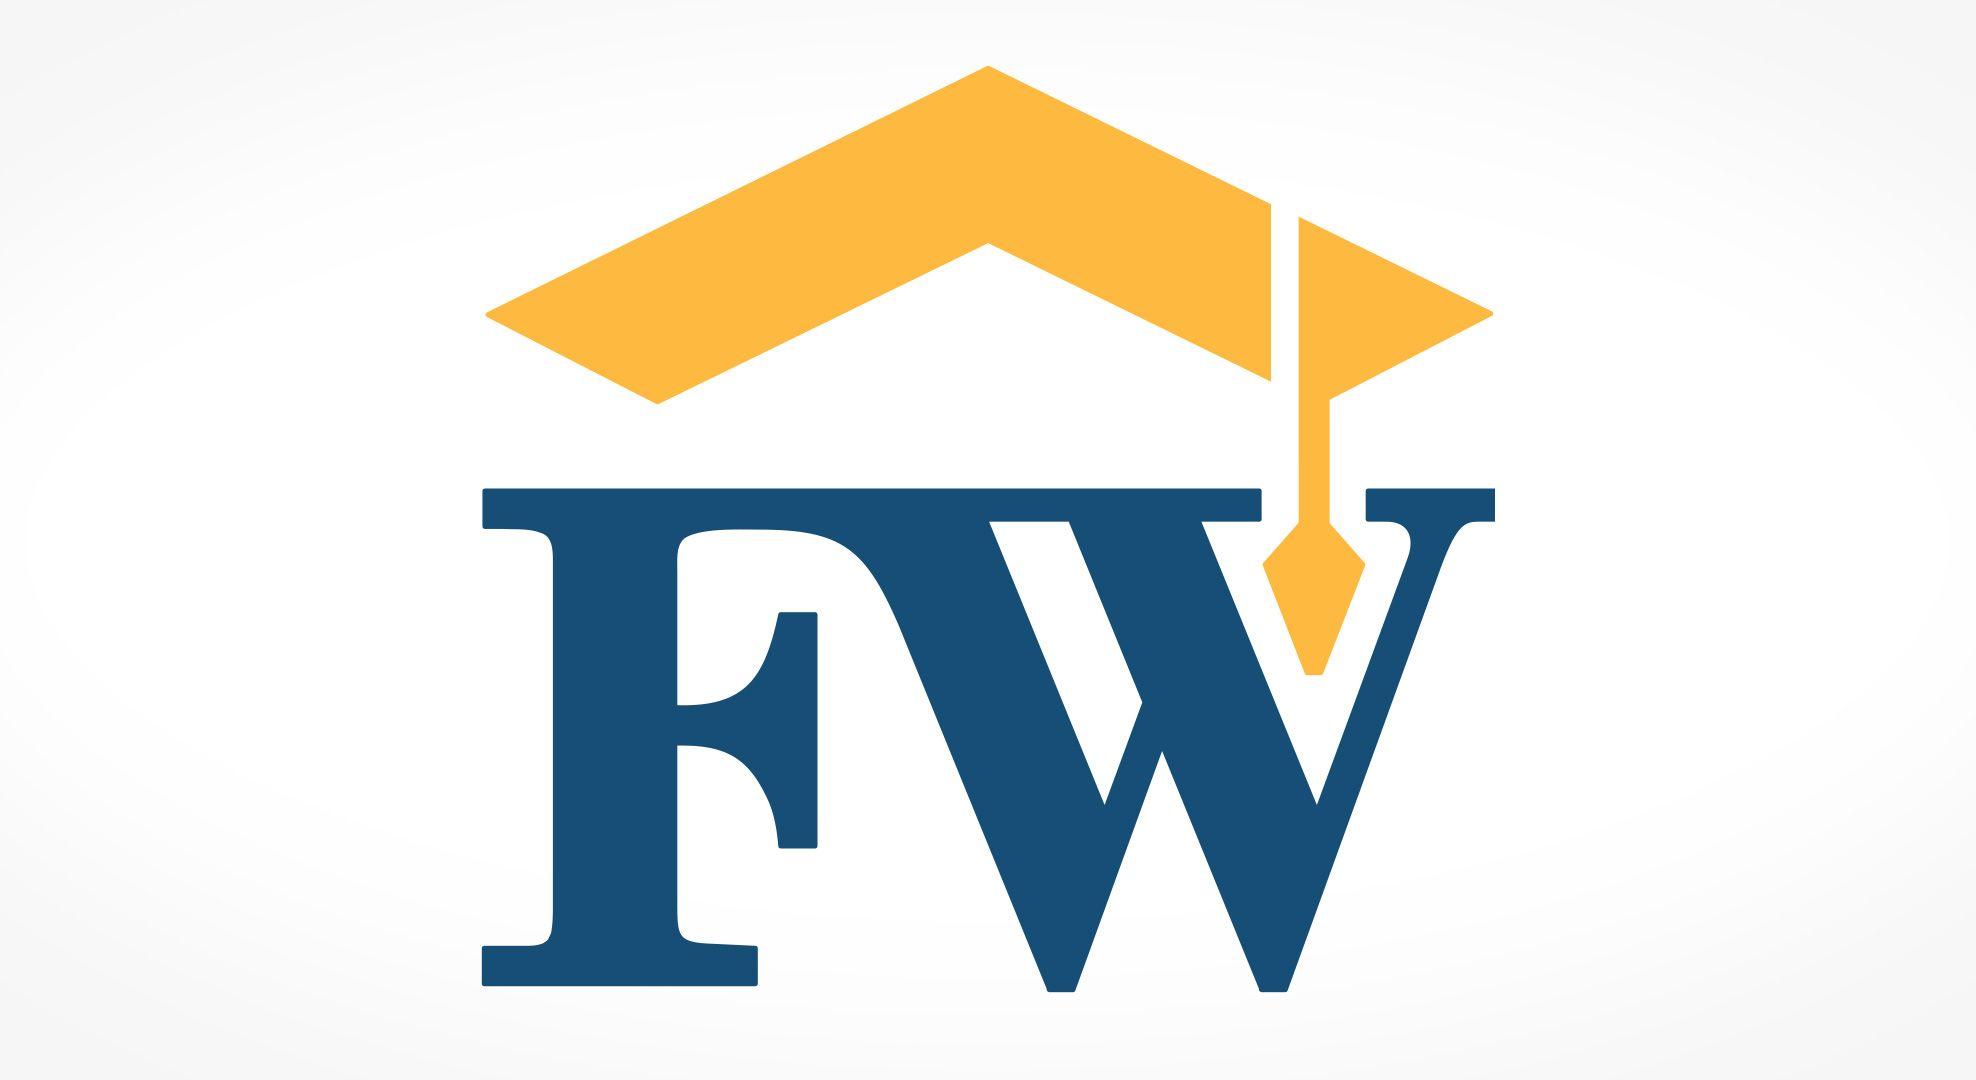 FW Logo - Flowing Wells Unified School District | Regole DesignRegole Design